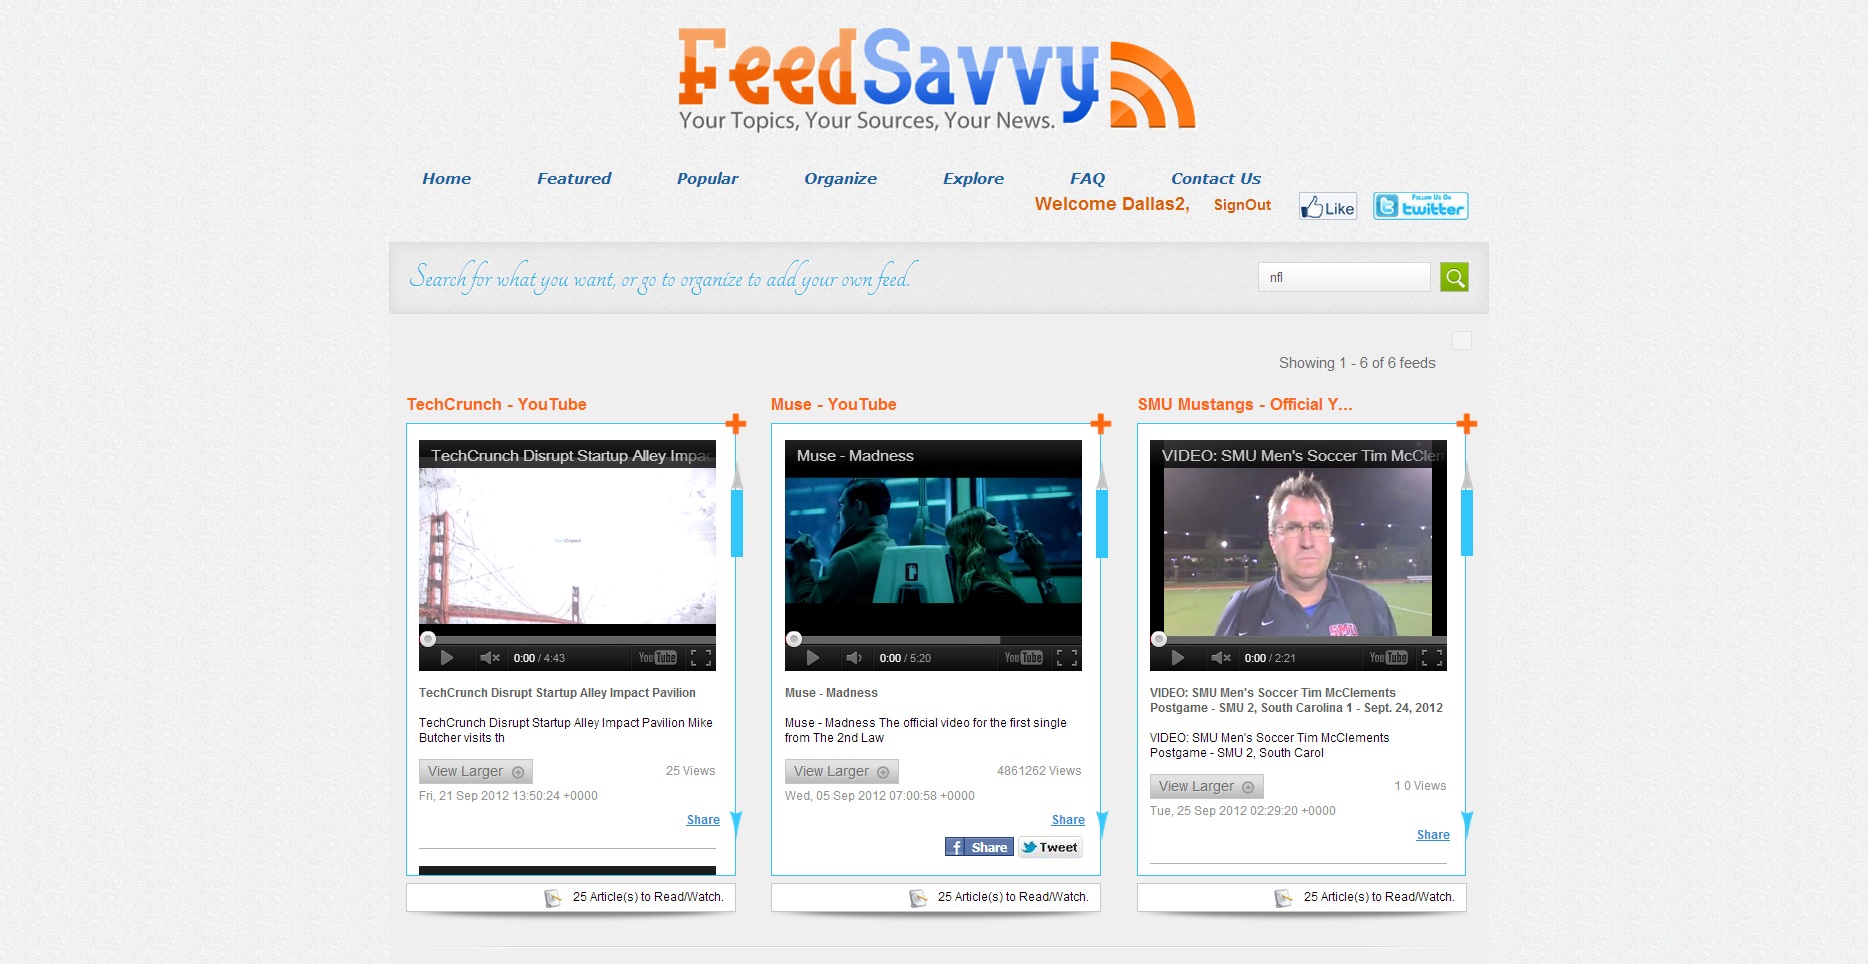 FeedSavvy.com